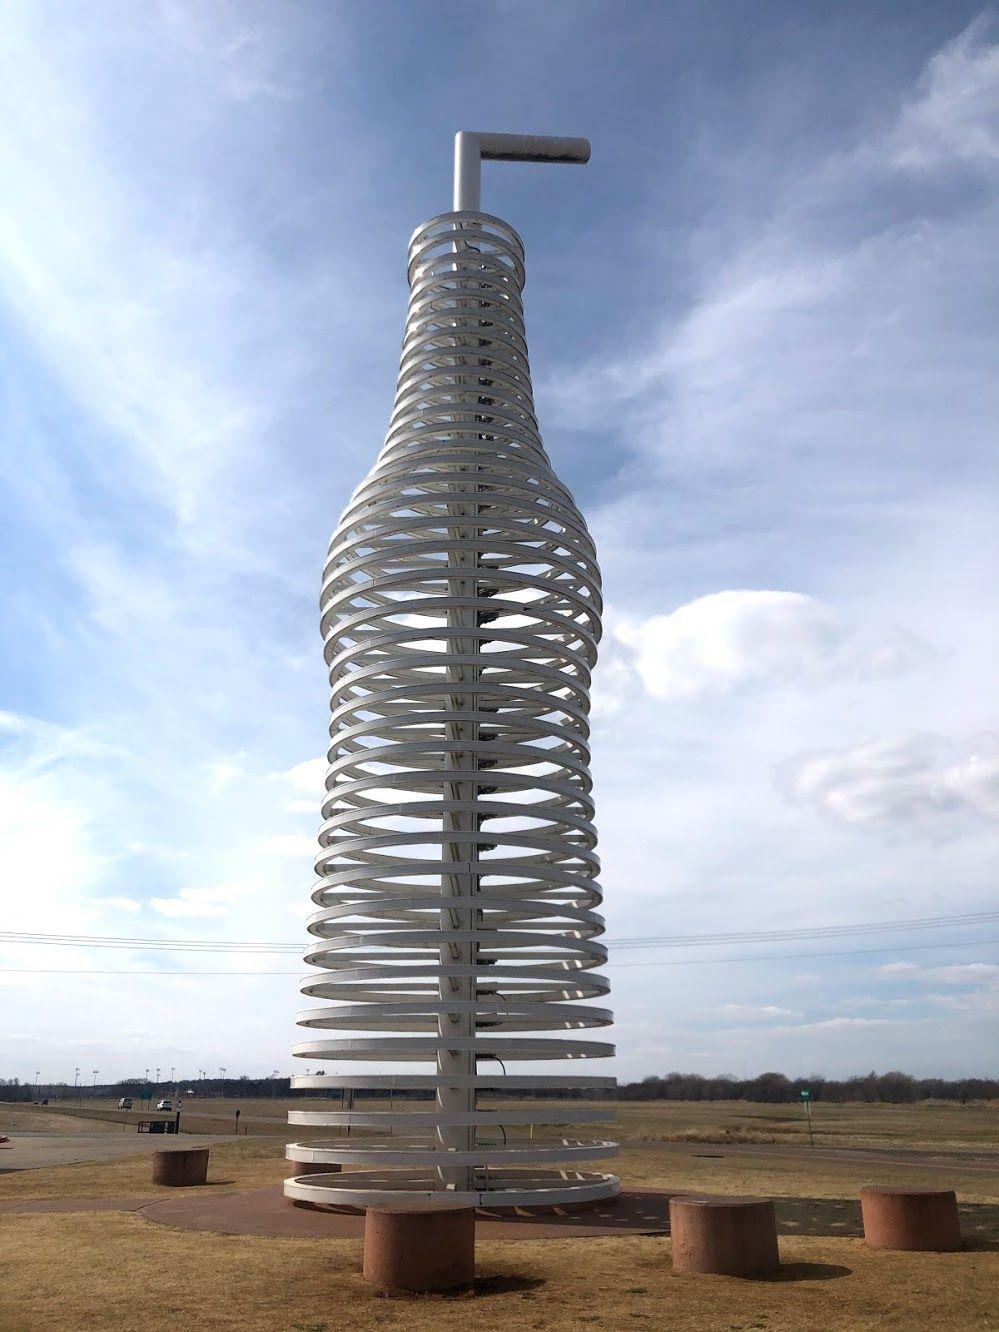 A large white sculpture resembling a soda bottle.